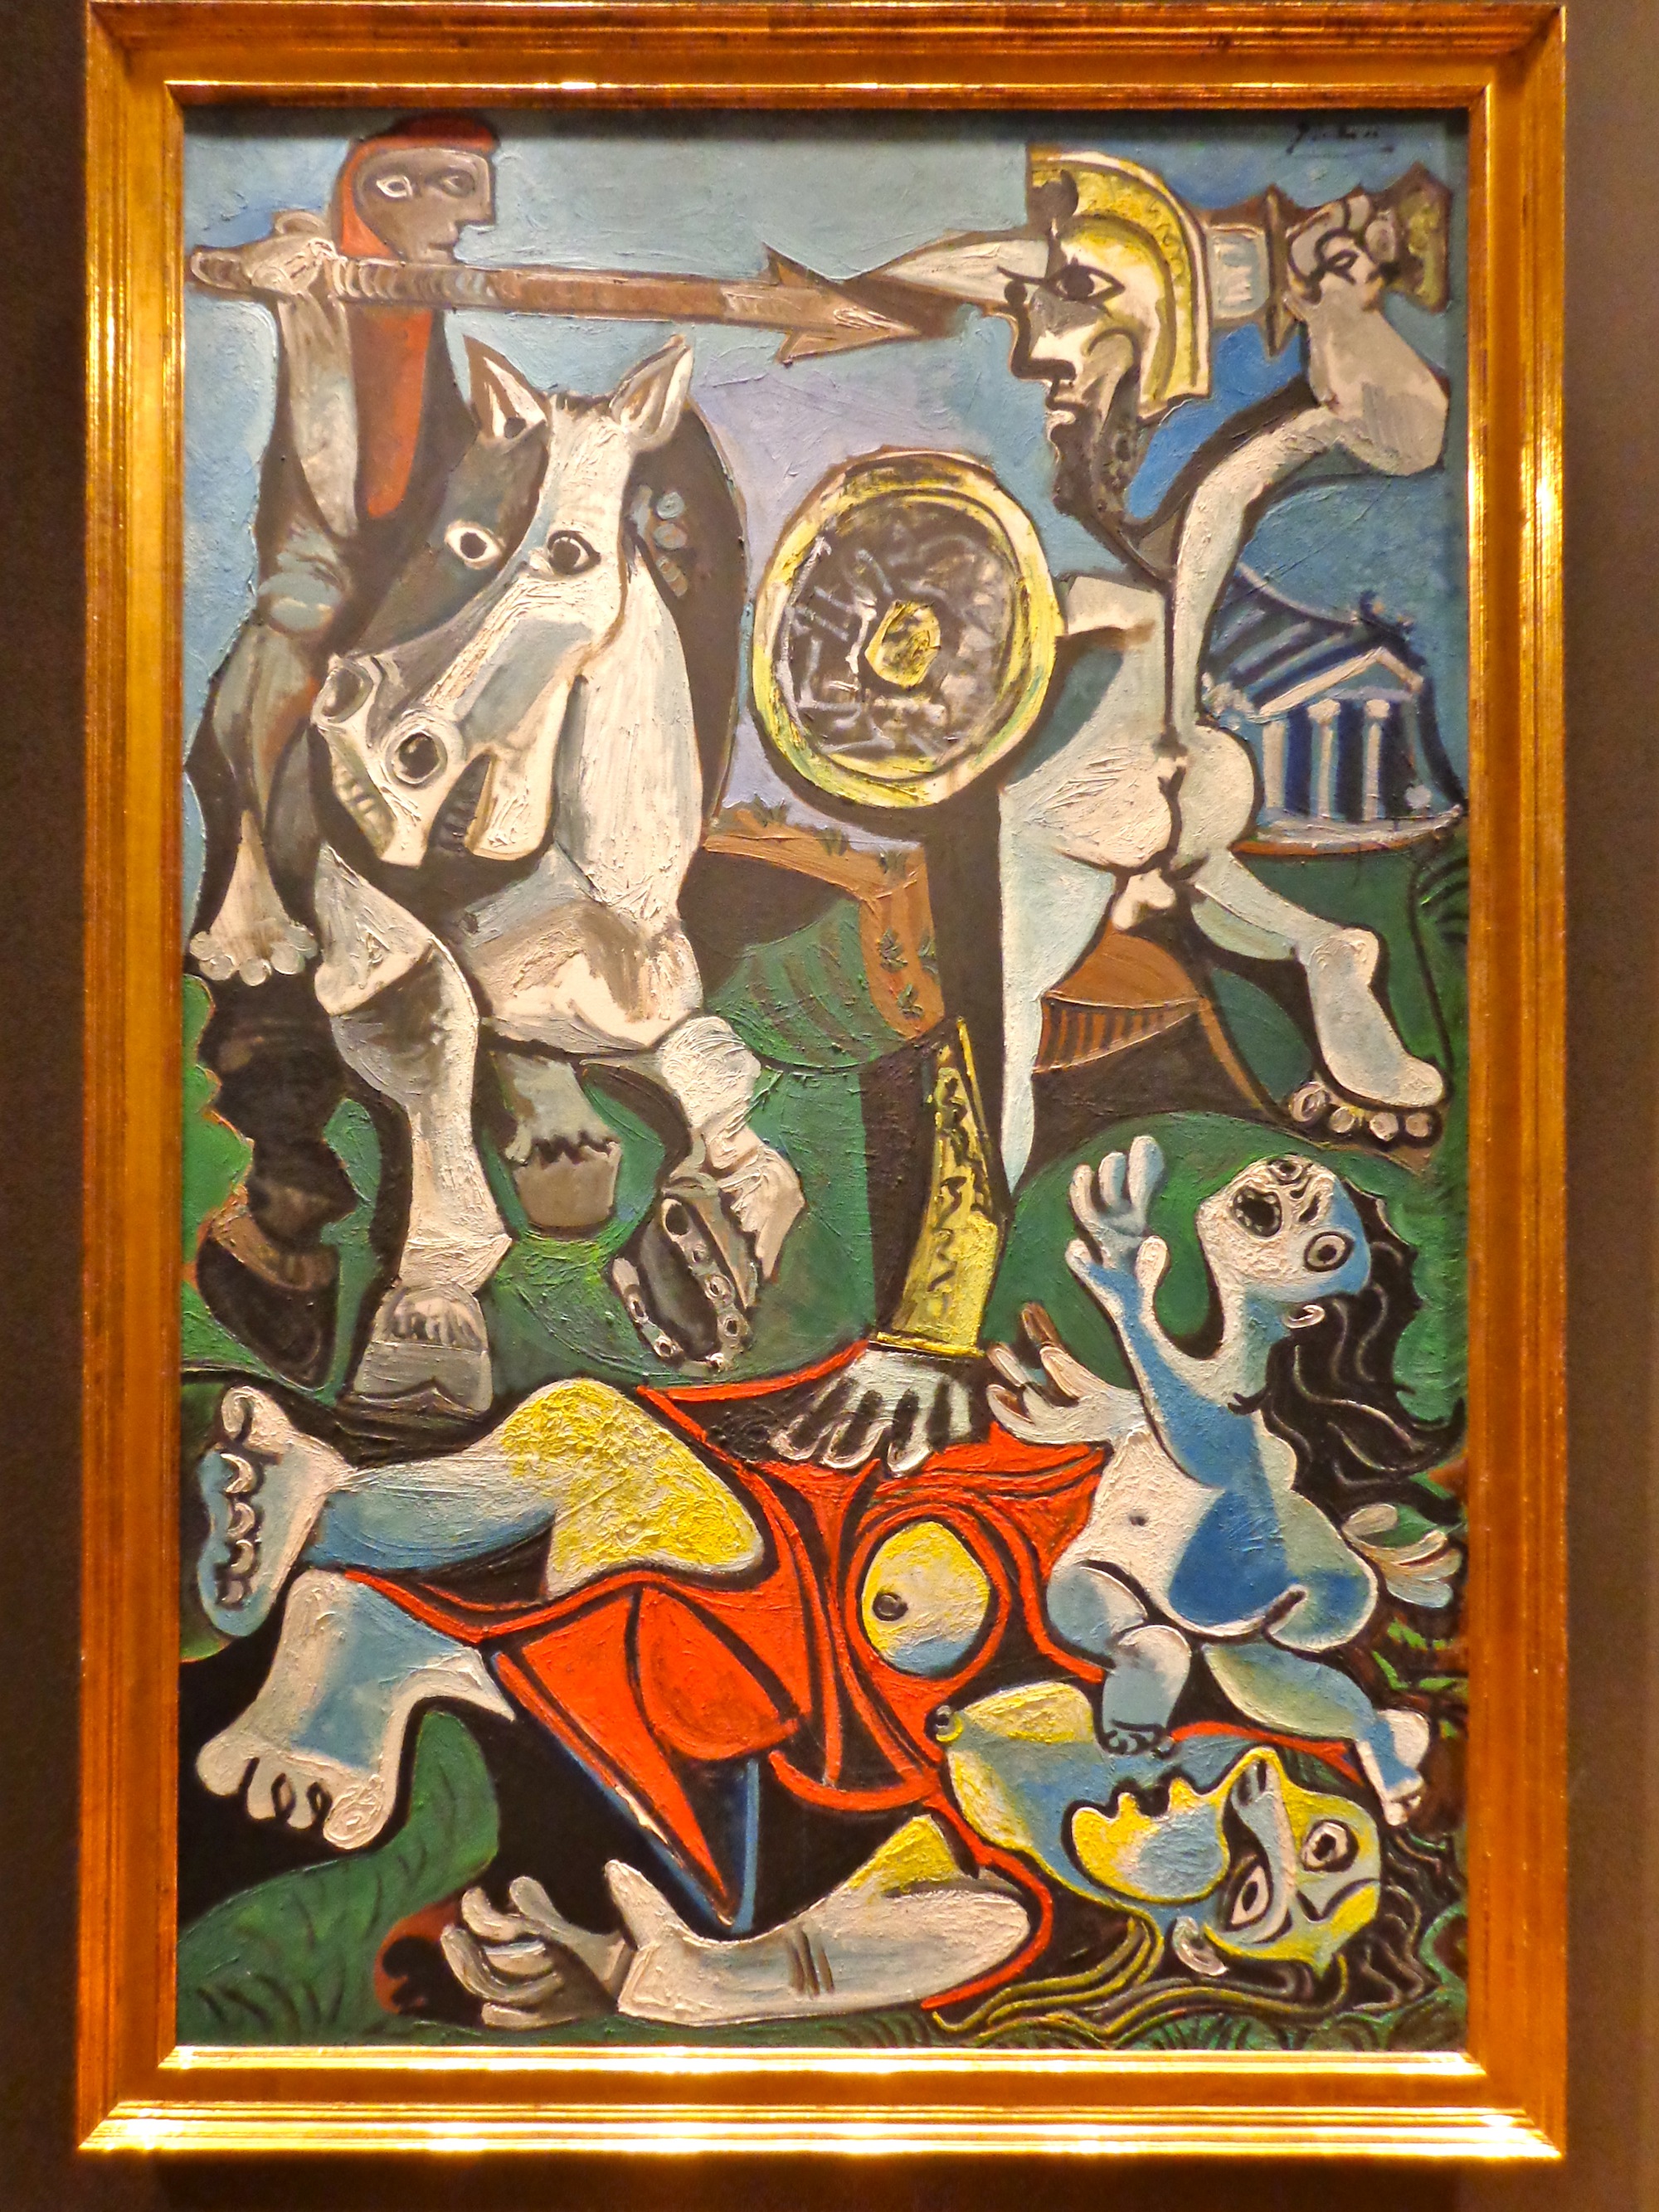 Pablo Picasso, "Rape of the Sabine Women," 1963